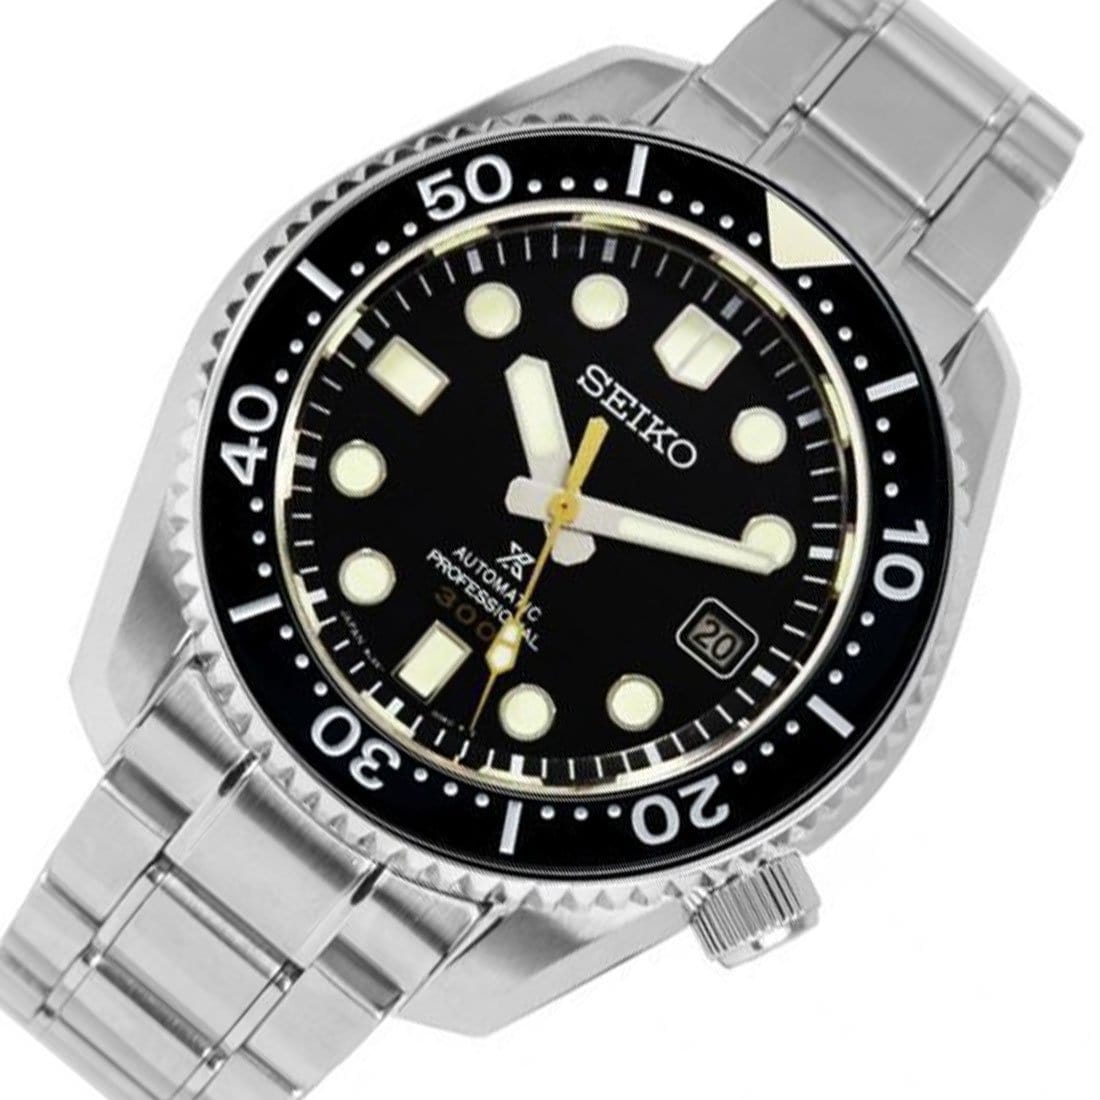 Seiko Marine Master Prospex SBDX023 [SLA021] Limited Edition Divers Watch